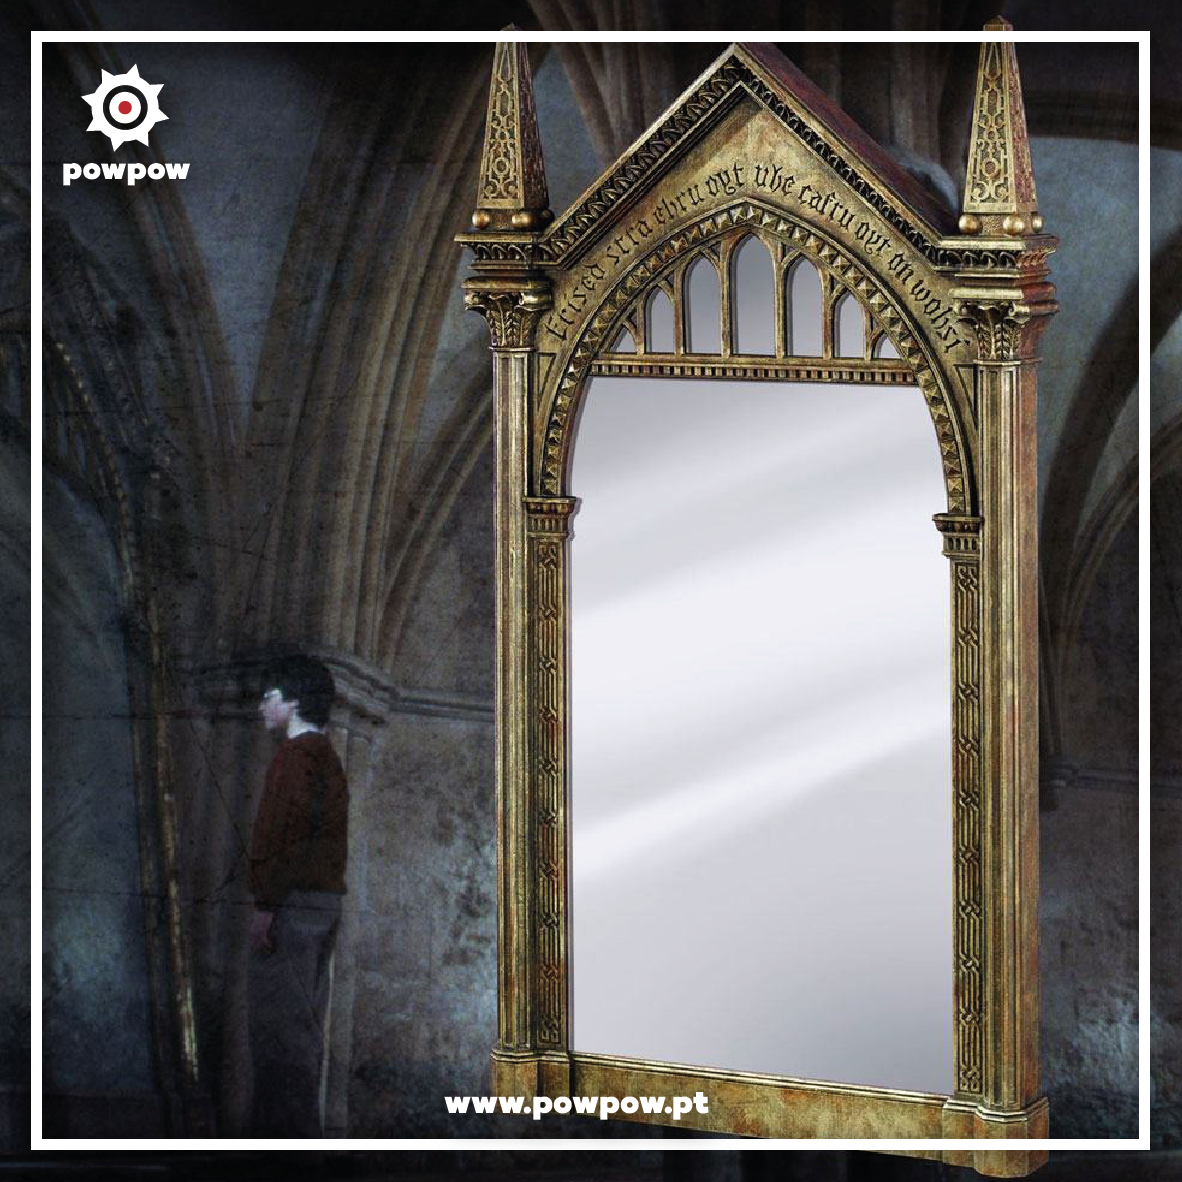 Harry Potter Replica The Mirror of Erised 